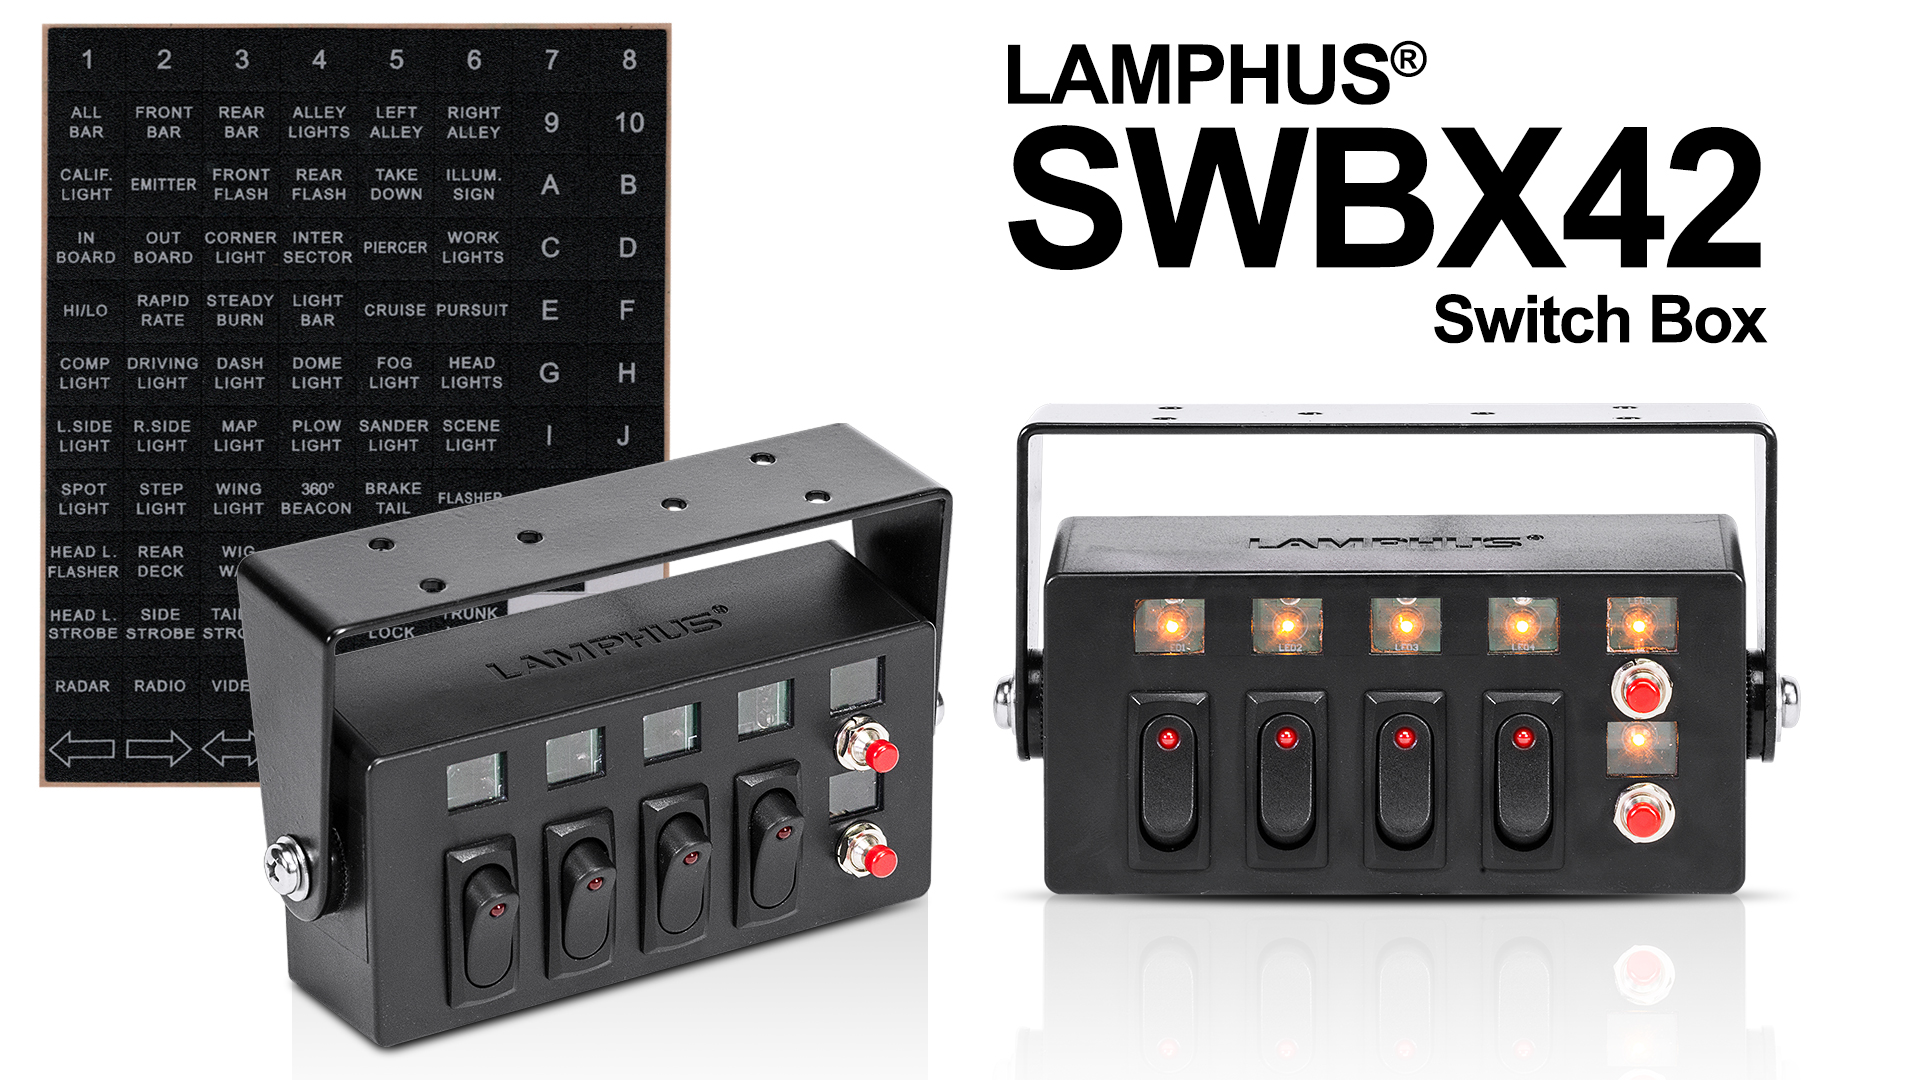 LAMPHUS® SWBX42 Switch Box Product Video